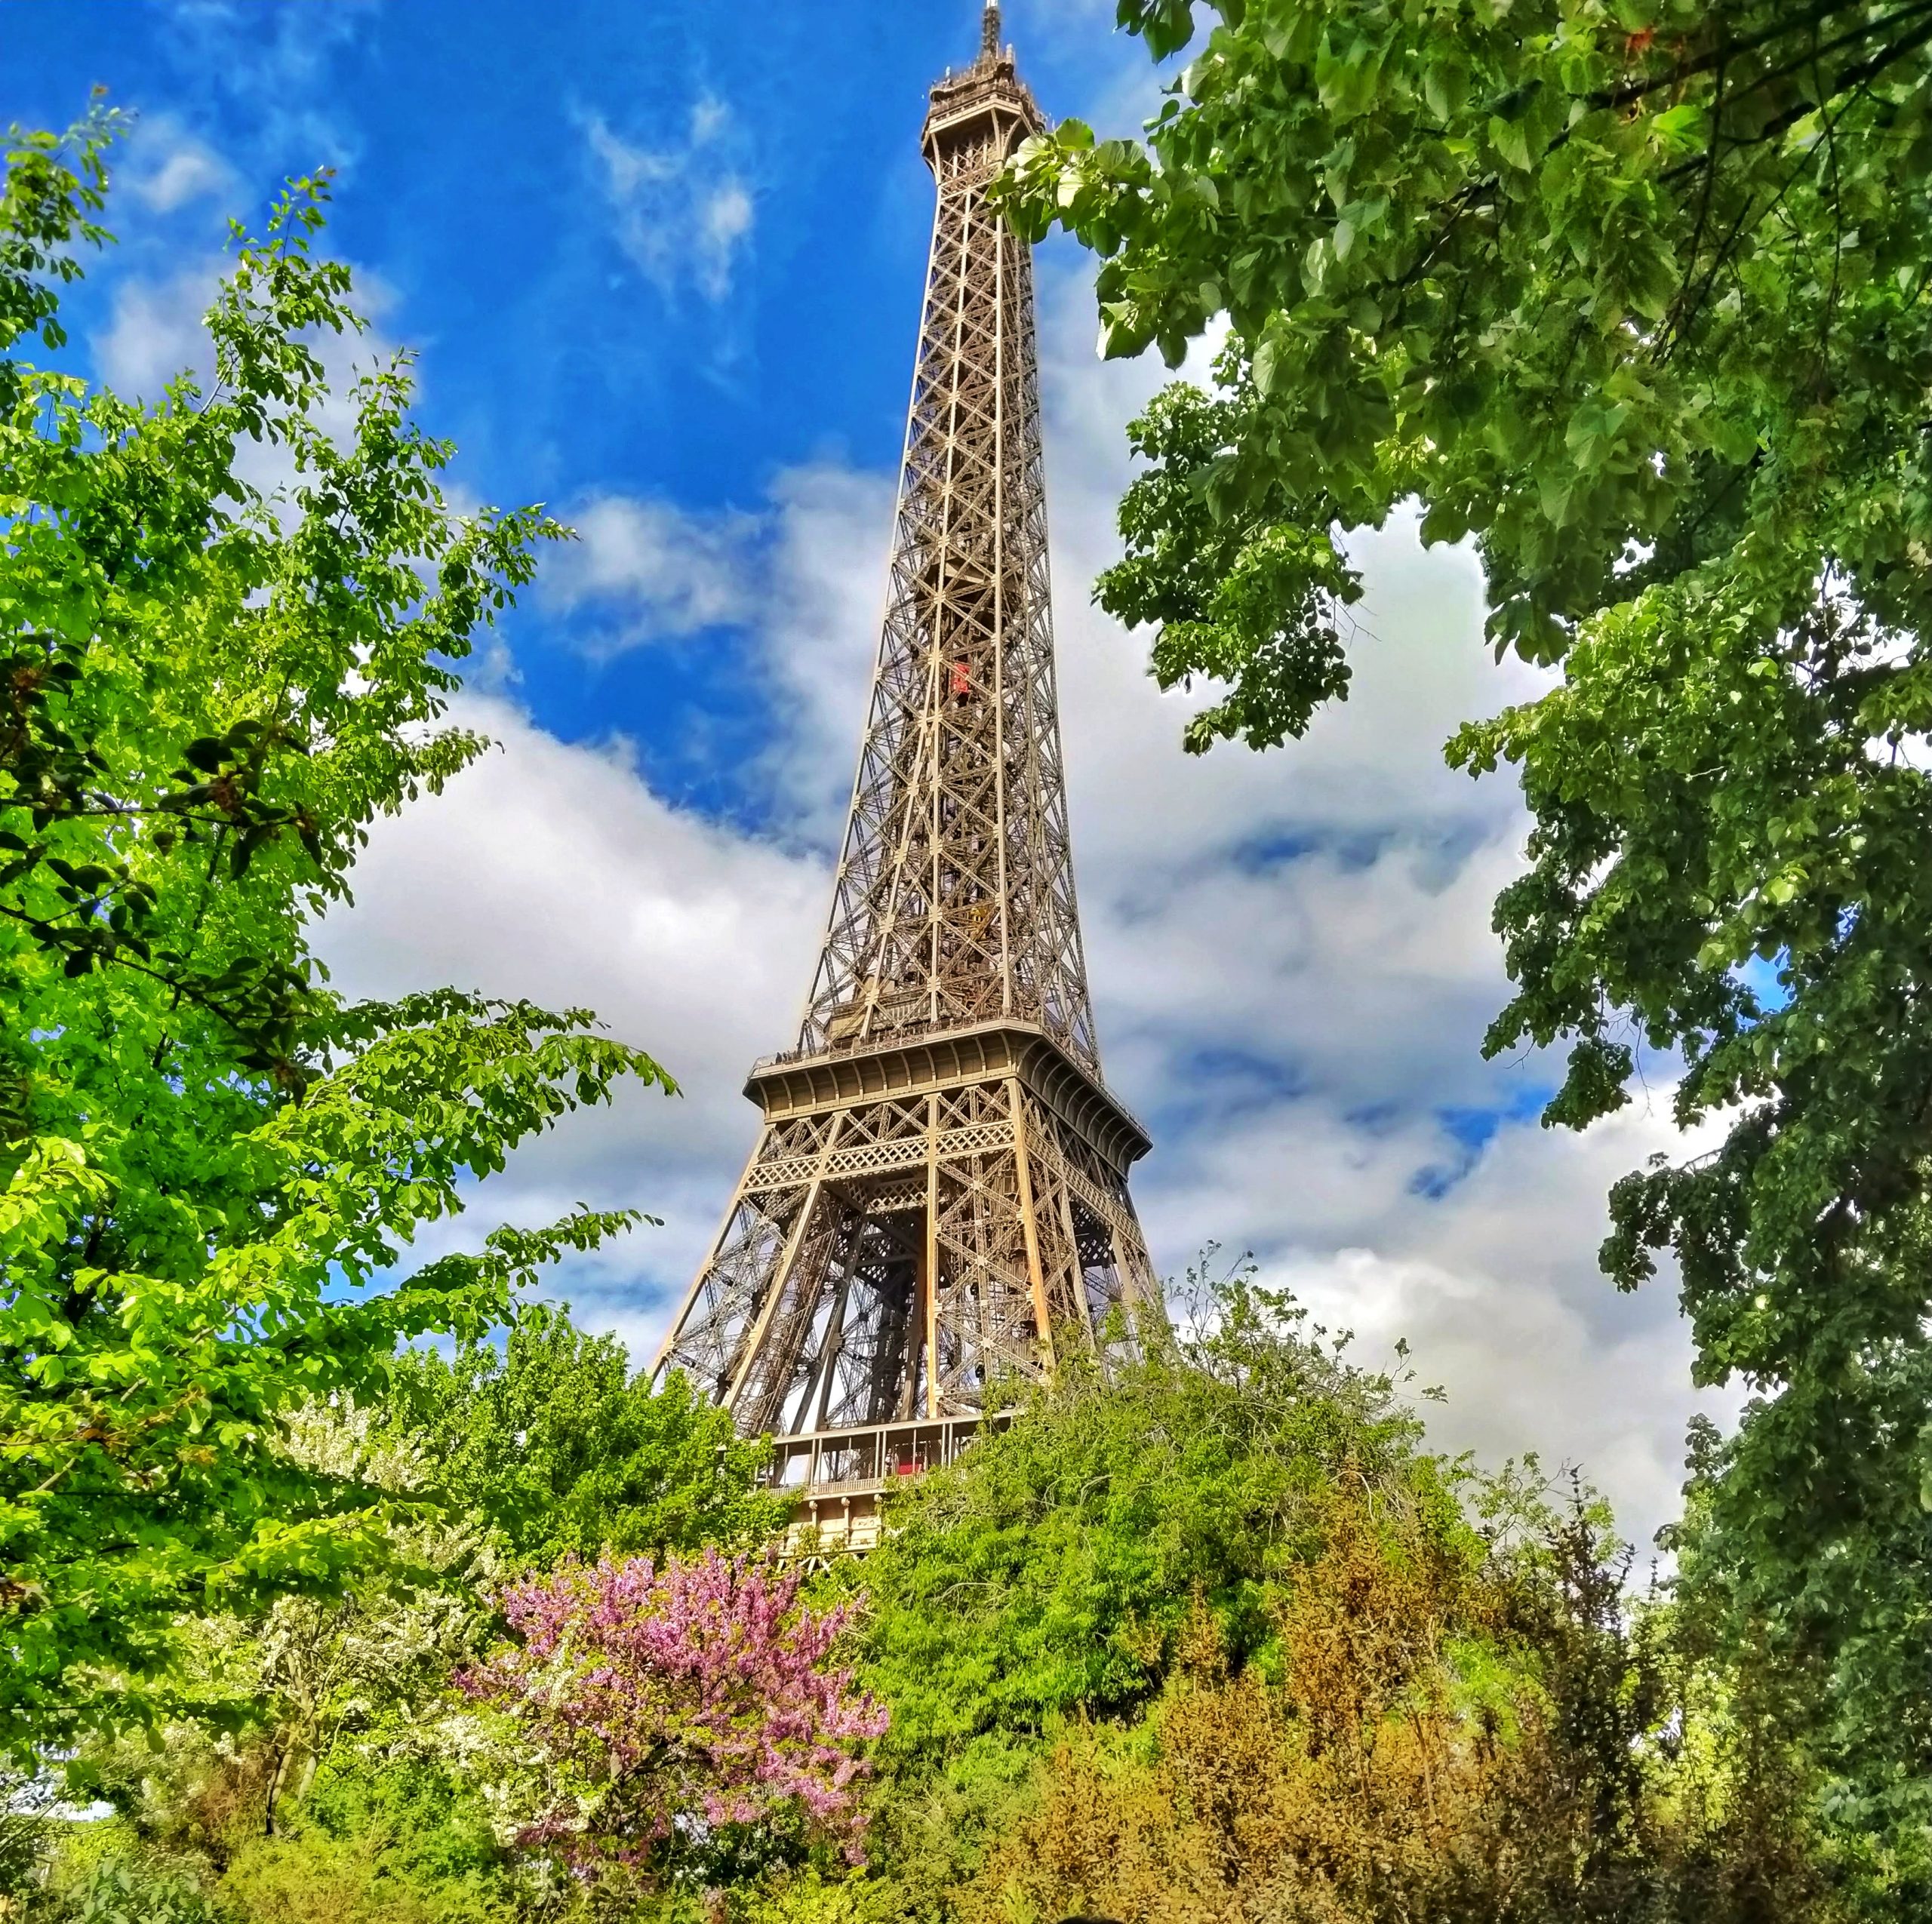 The Iron Lady – Eiffel Tower, Paris, France